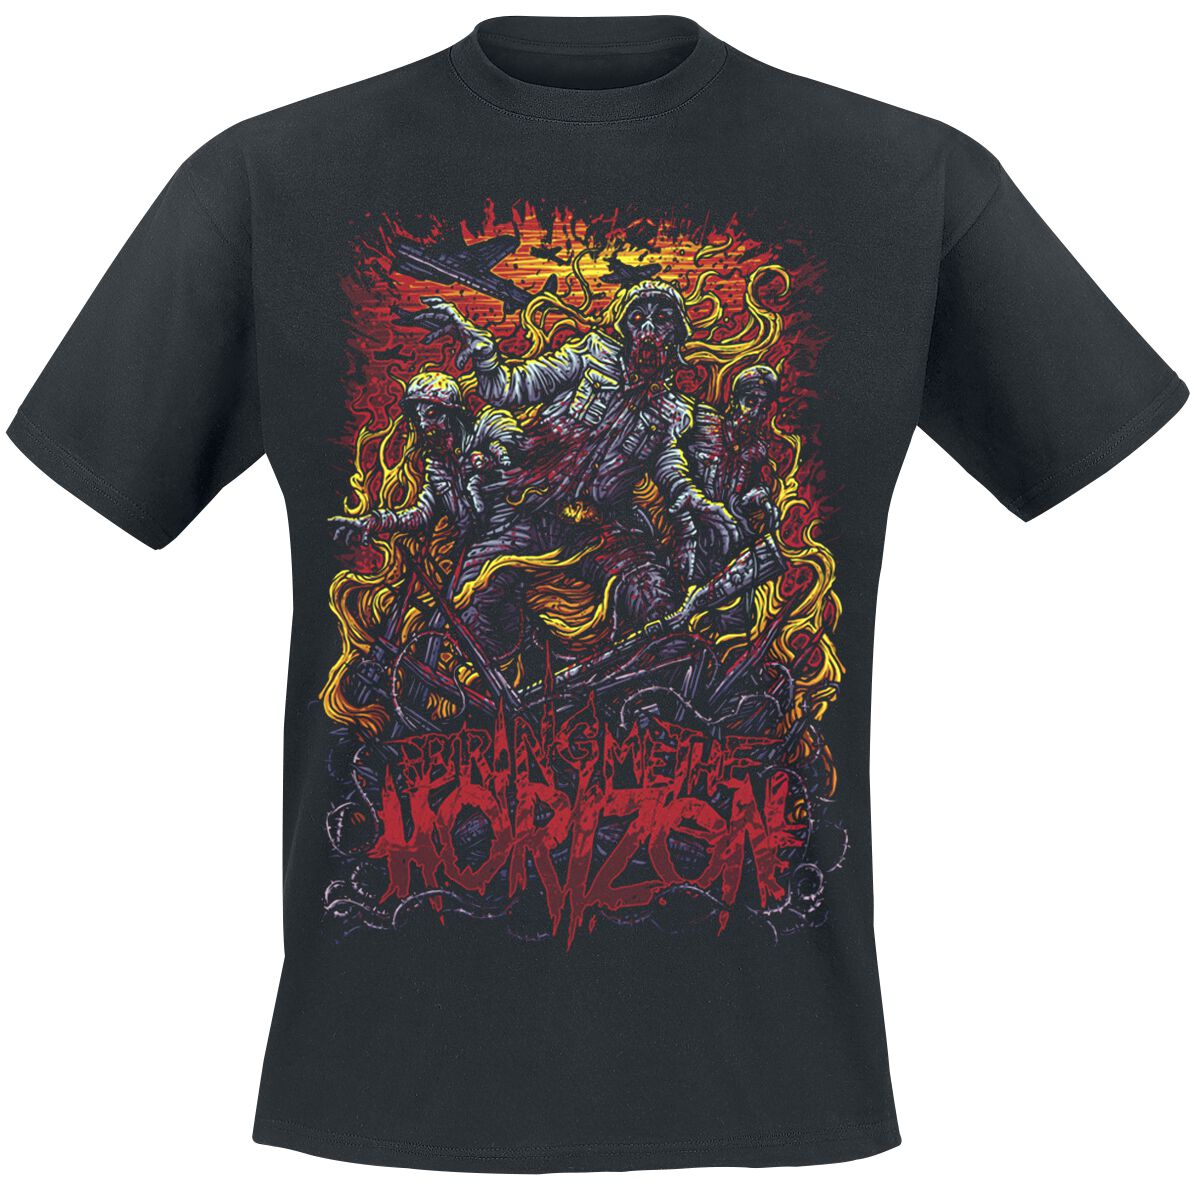 bring me the horizon t-shirt - zombie army - s bis xxl - fÃ¼r mÃ¤nner - grÃ¶ÃŸe xxl - - lizenziertes merchandise! schwarz